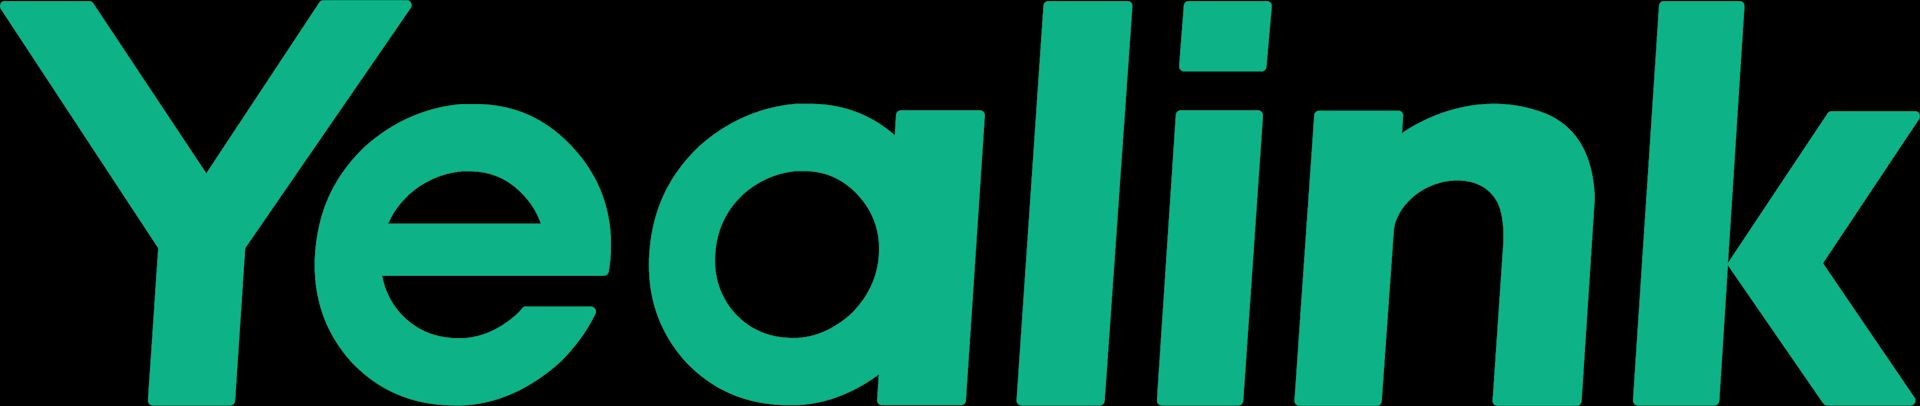 logo-green